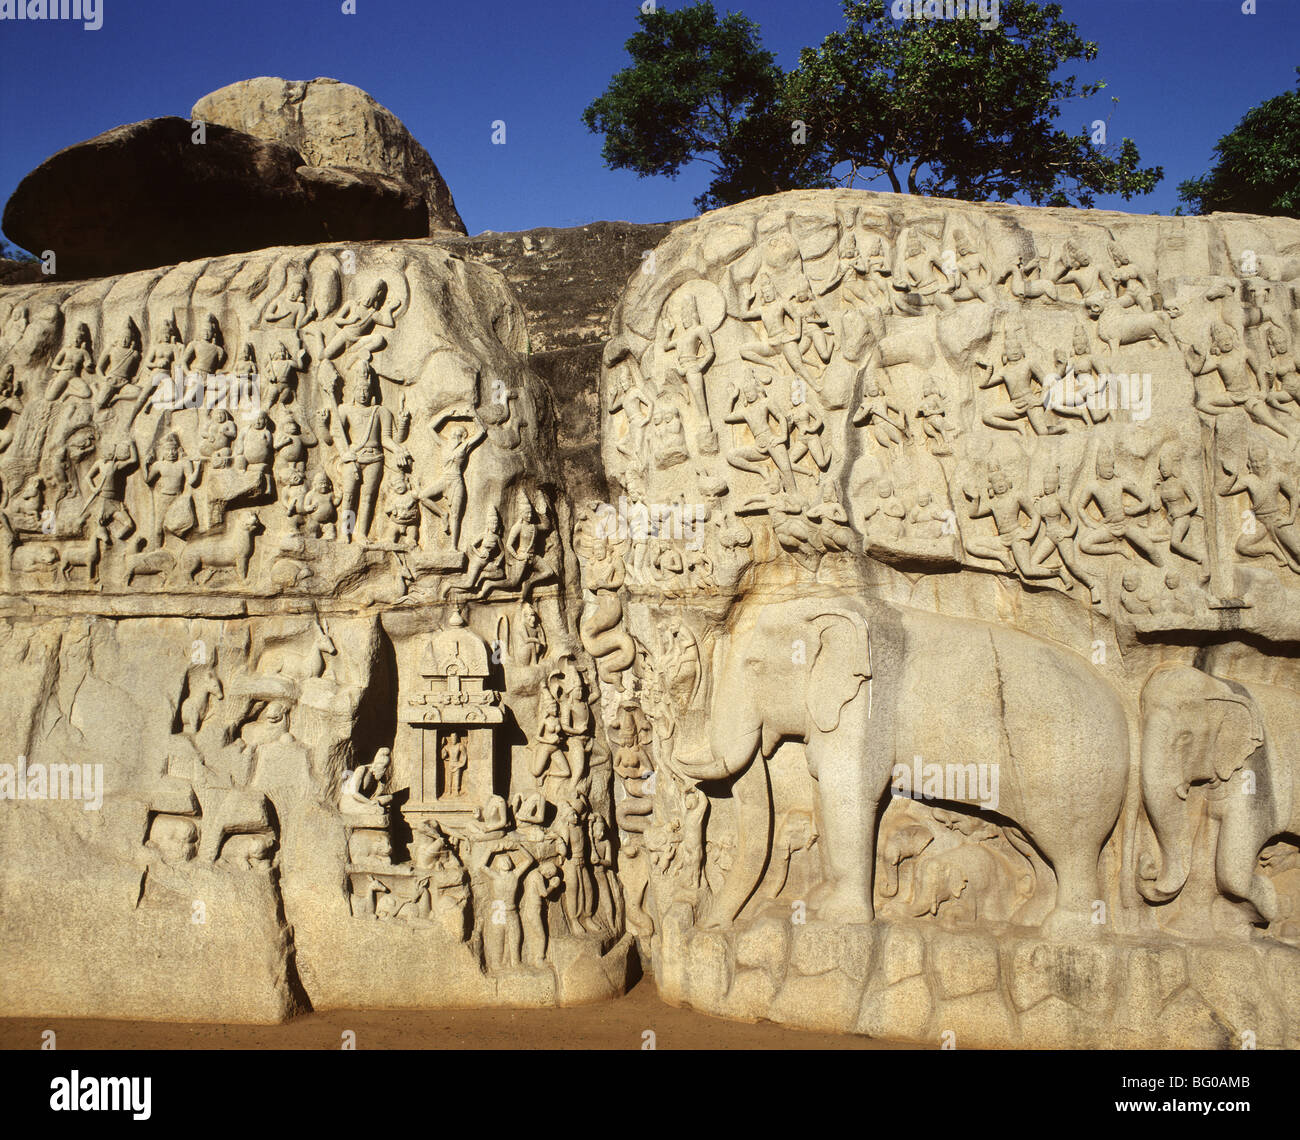 La pénitence d'Arjuna, Mahabalipuram, UNESCO World Heritage Site, Kancheepuram district, Tamil Nadu, Inde, Asie Banque D'Images